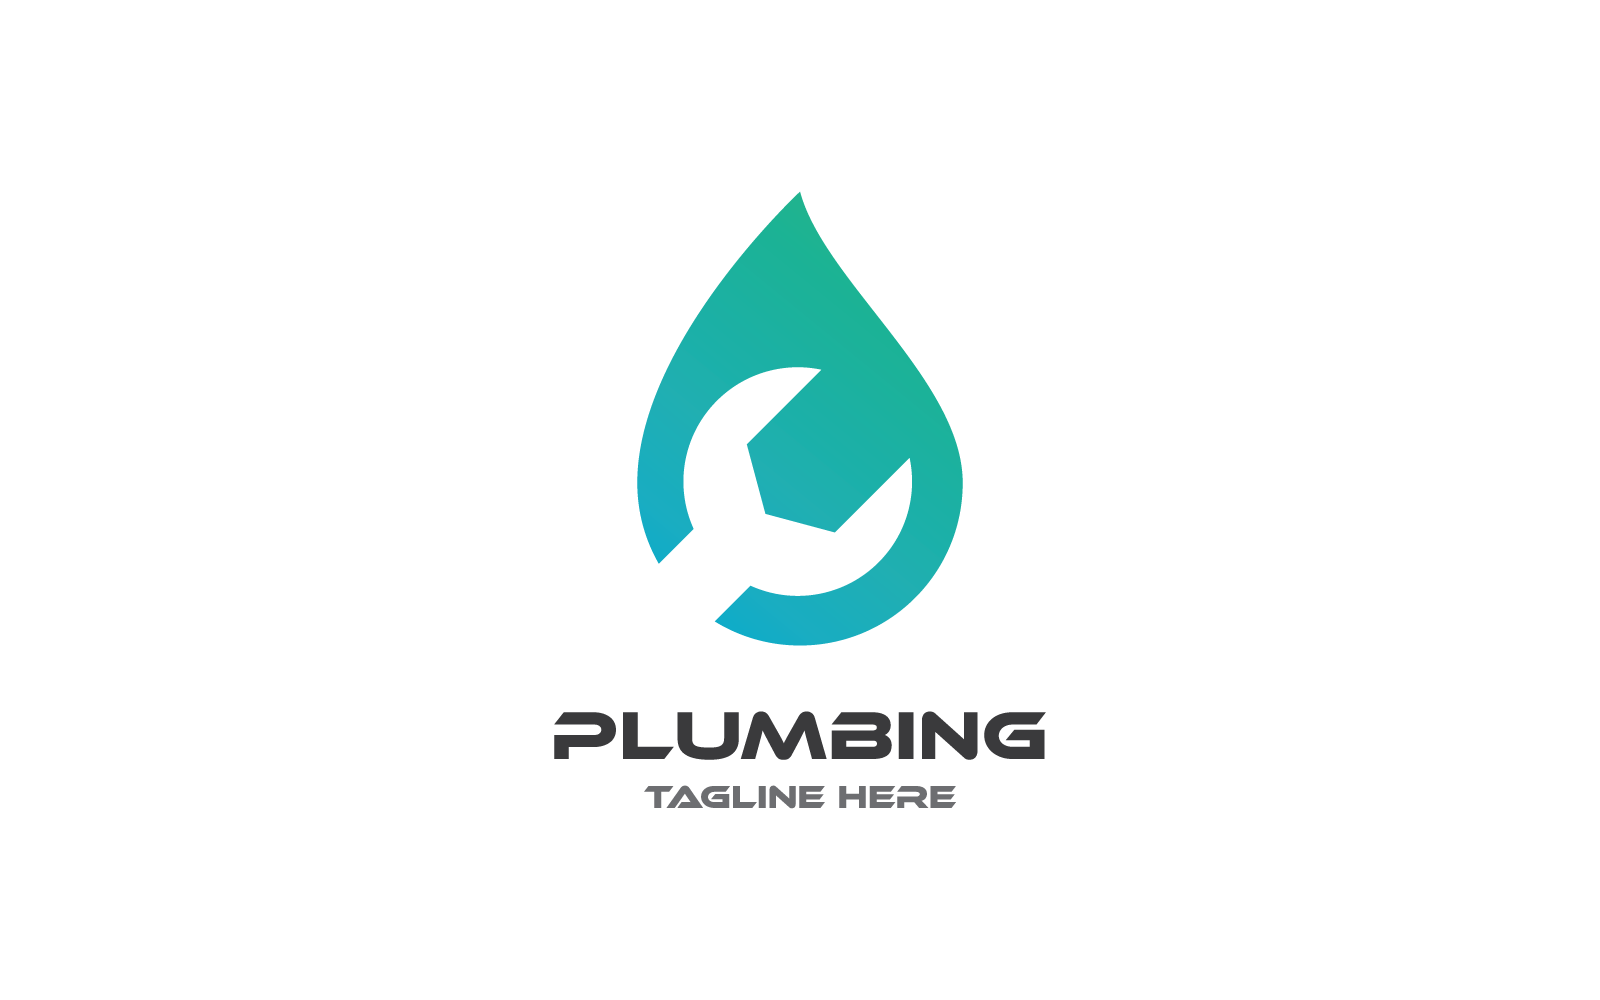 Plumbing logo vector illustration design business template